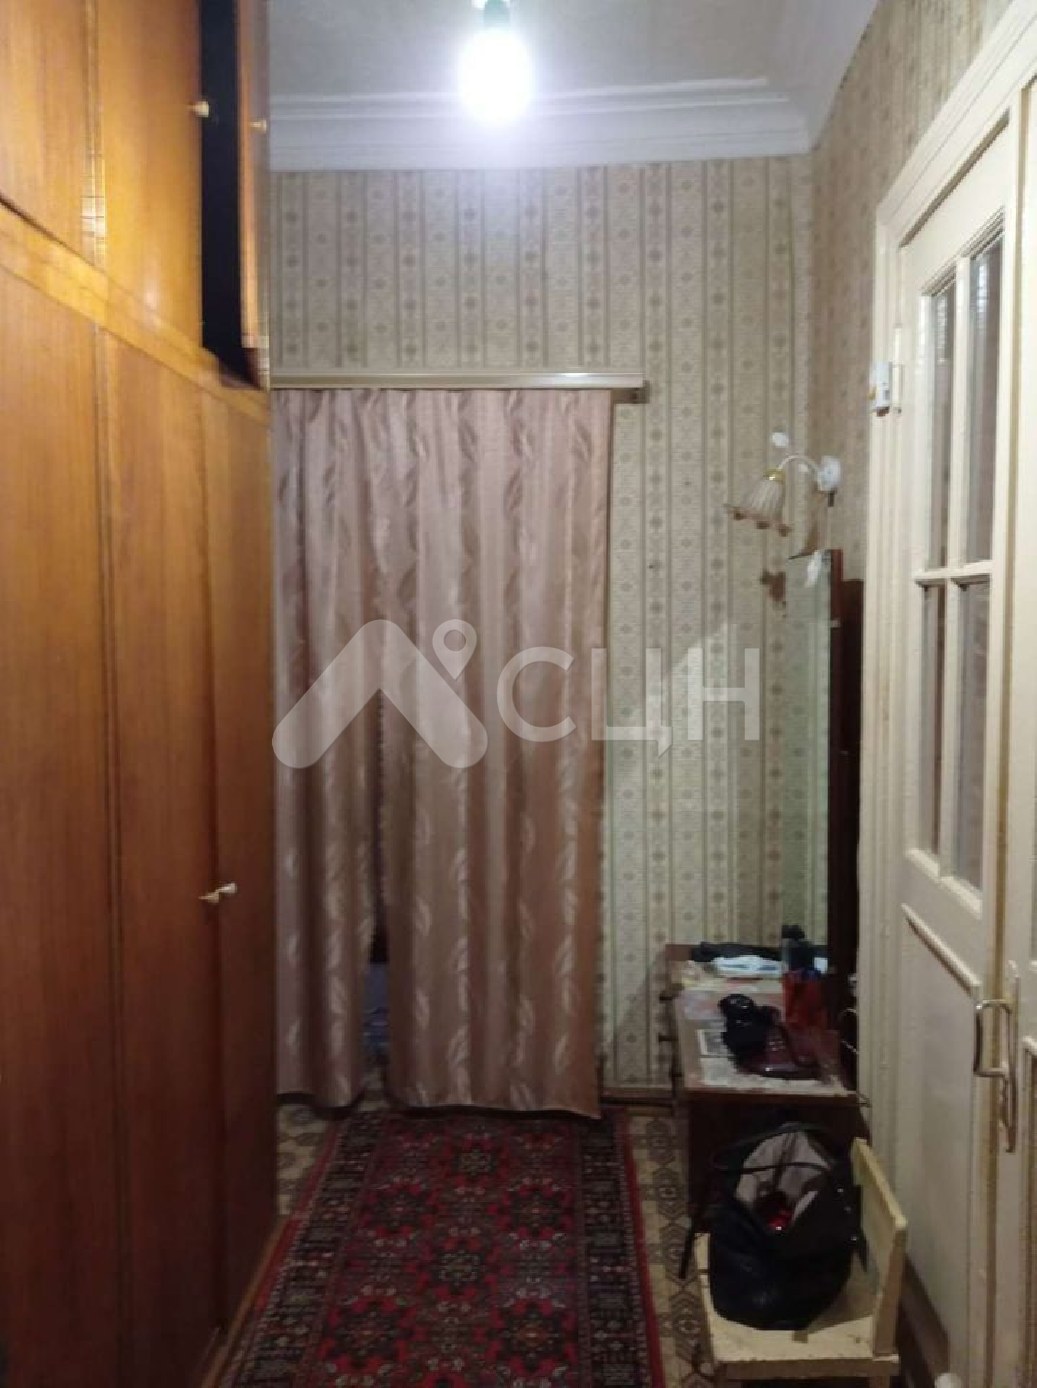 циан саров квартиры
: Г. Саров, улица Ушакова, 18, 2-комн квартира, этаж 2 из 3, продажа.